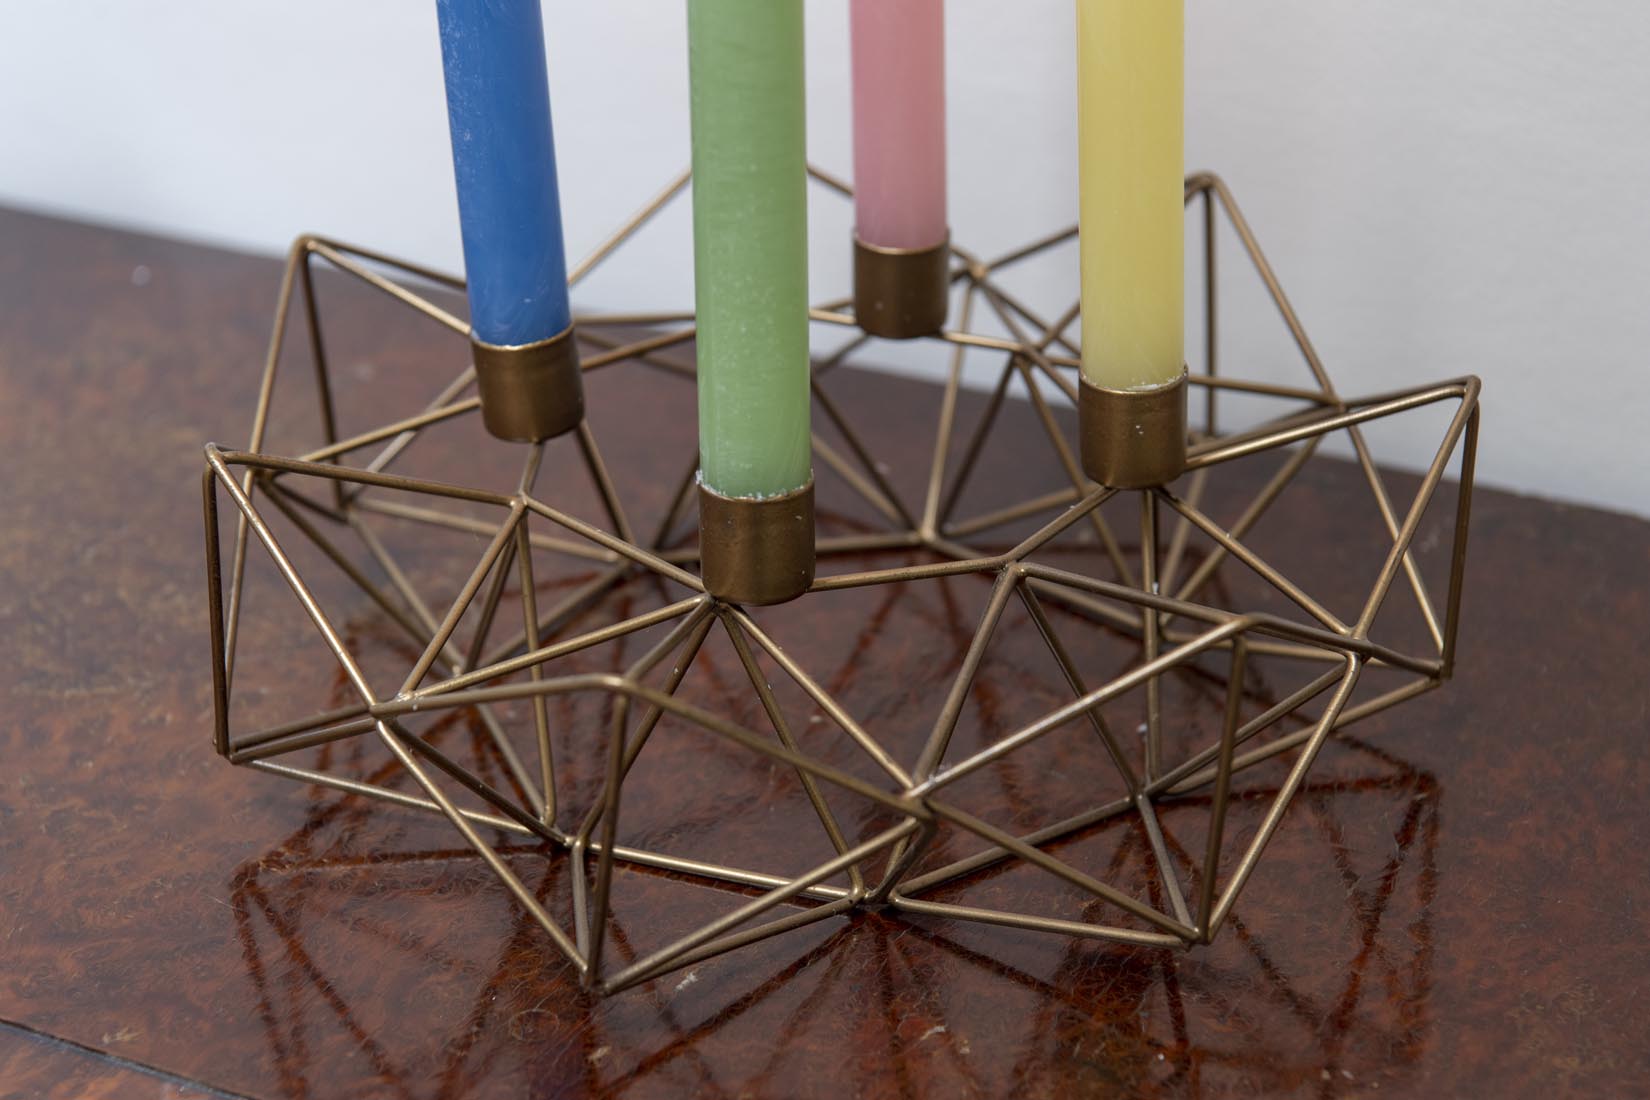 Geometric star shaped candleholder - Natalia Willmott